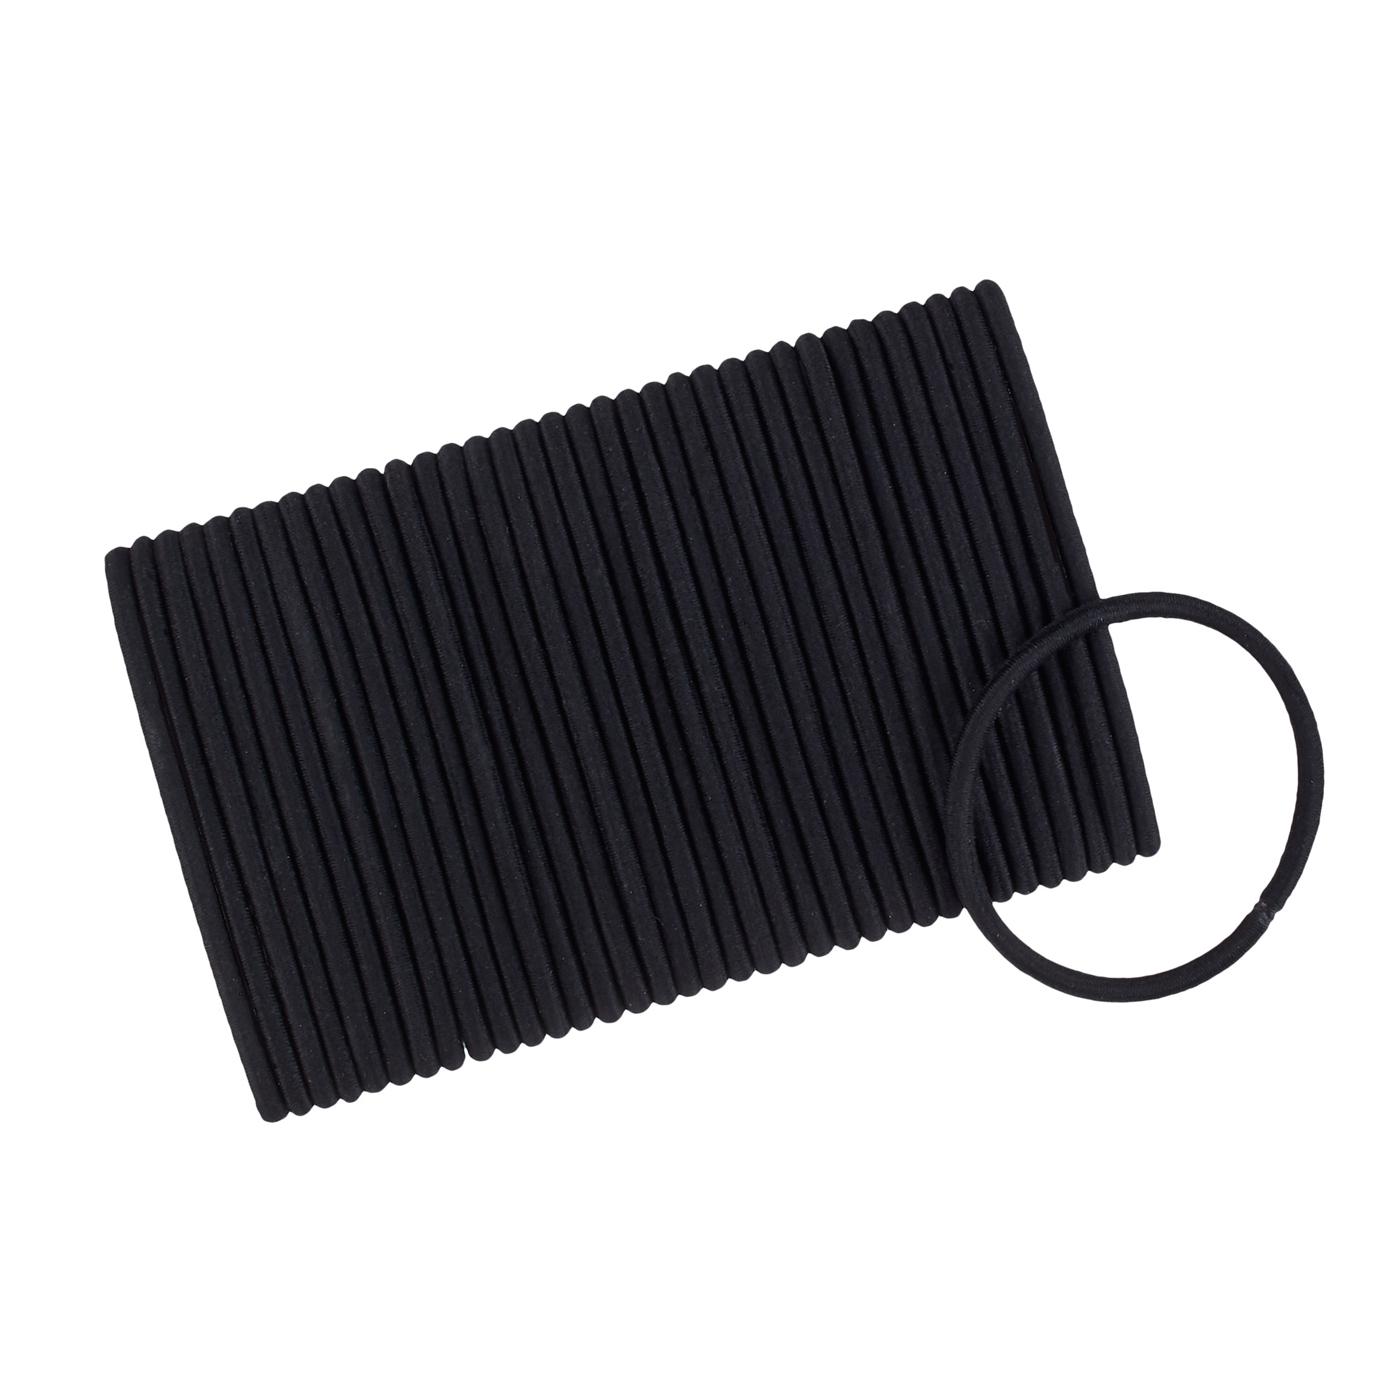 Scunci® Black Nylon Extra Thick Hair Elastic Hair Bands, 10 ct